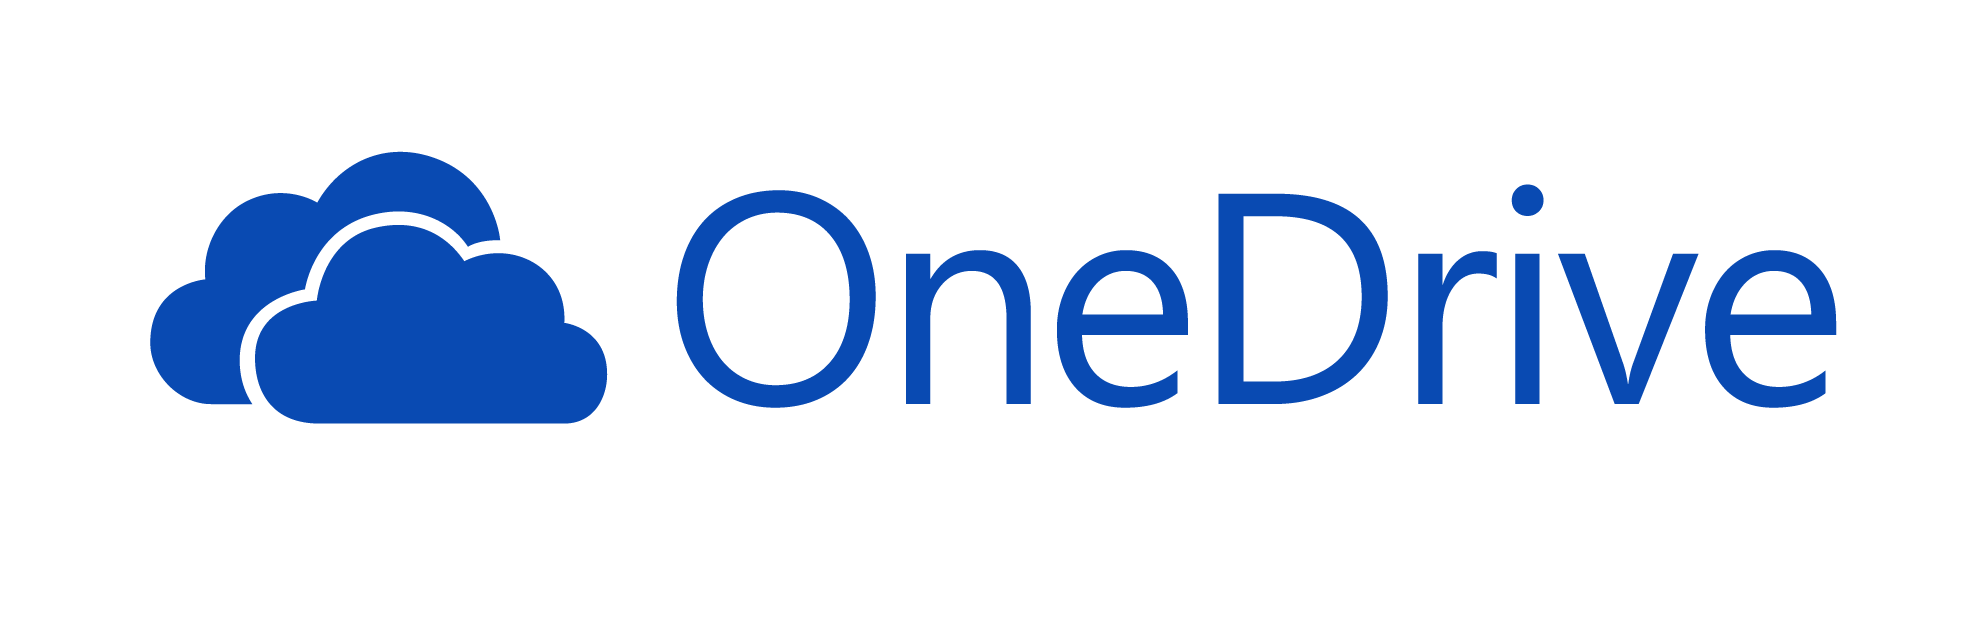 OneDrive-Logo - Gestalia | Enterprise Business Solutions